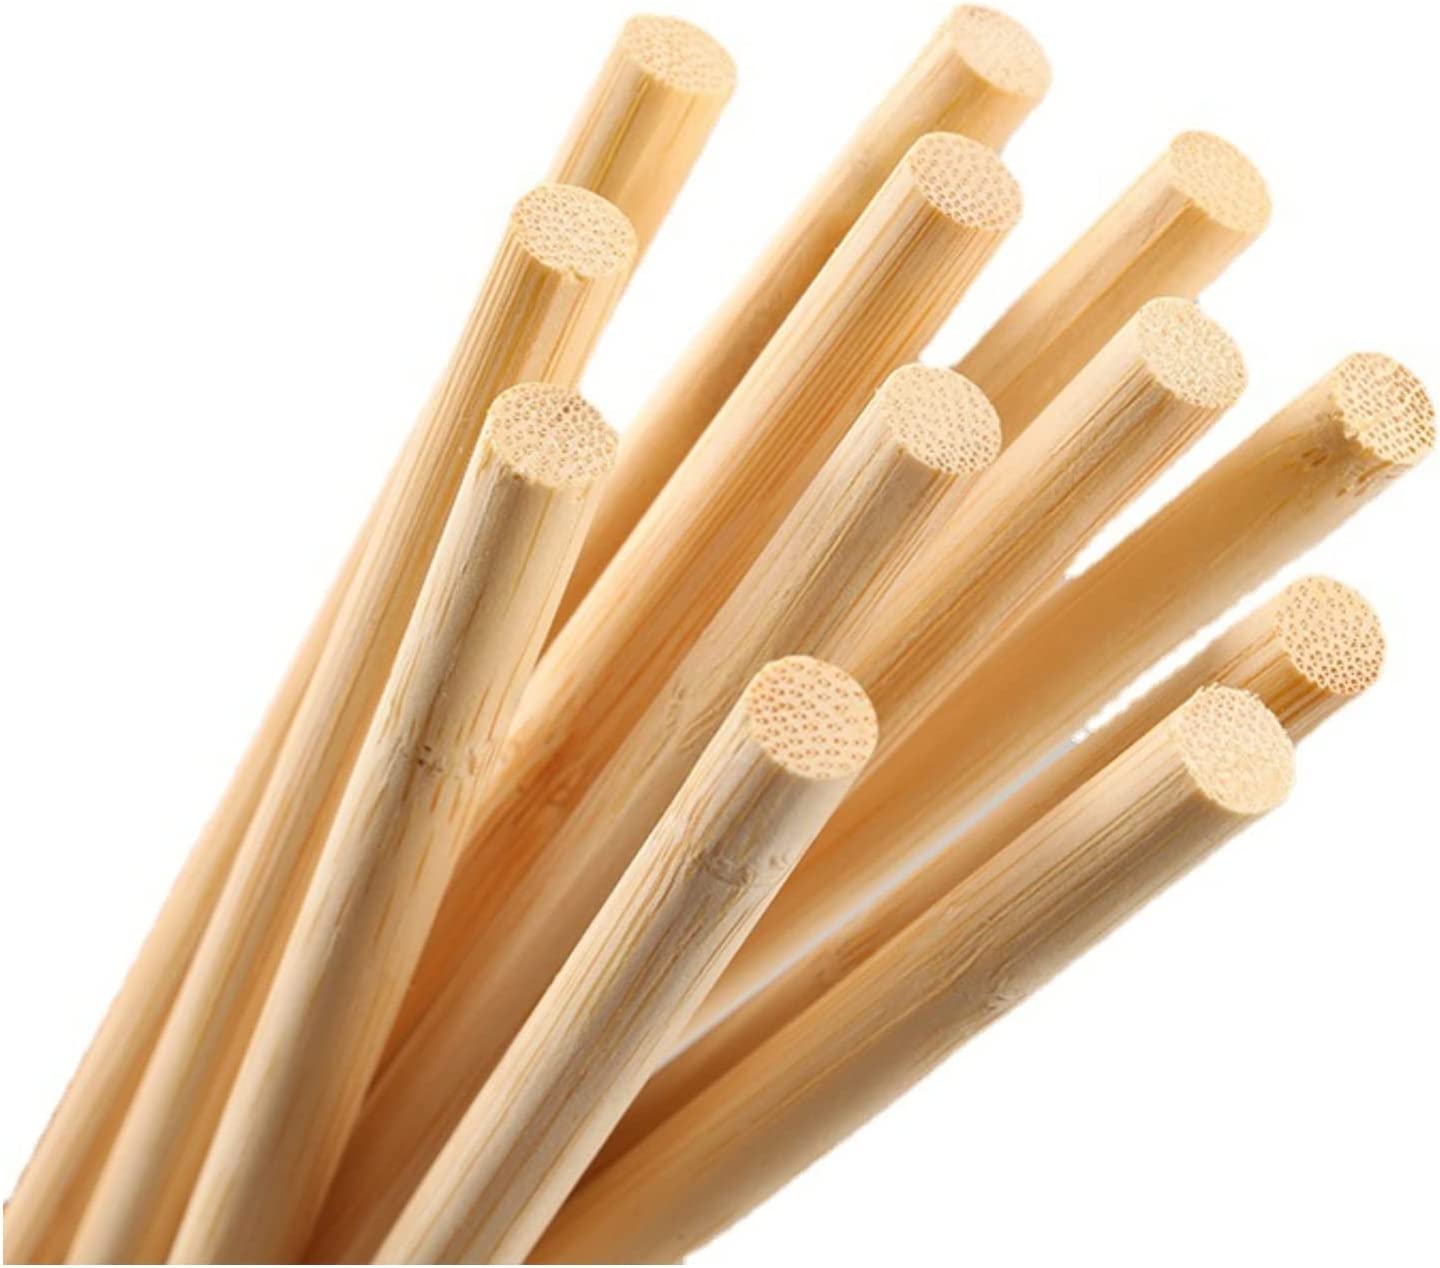 25PCS Dowel Rods Wood Sticks Wooden Dowel Rods